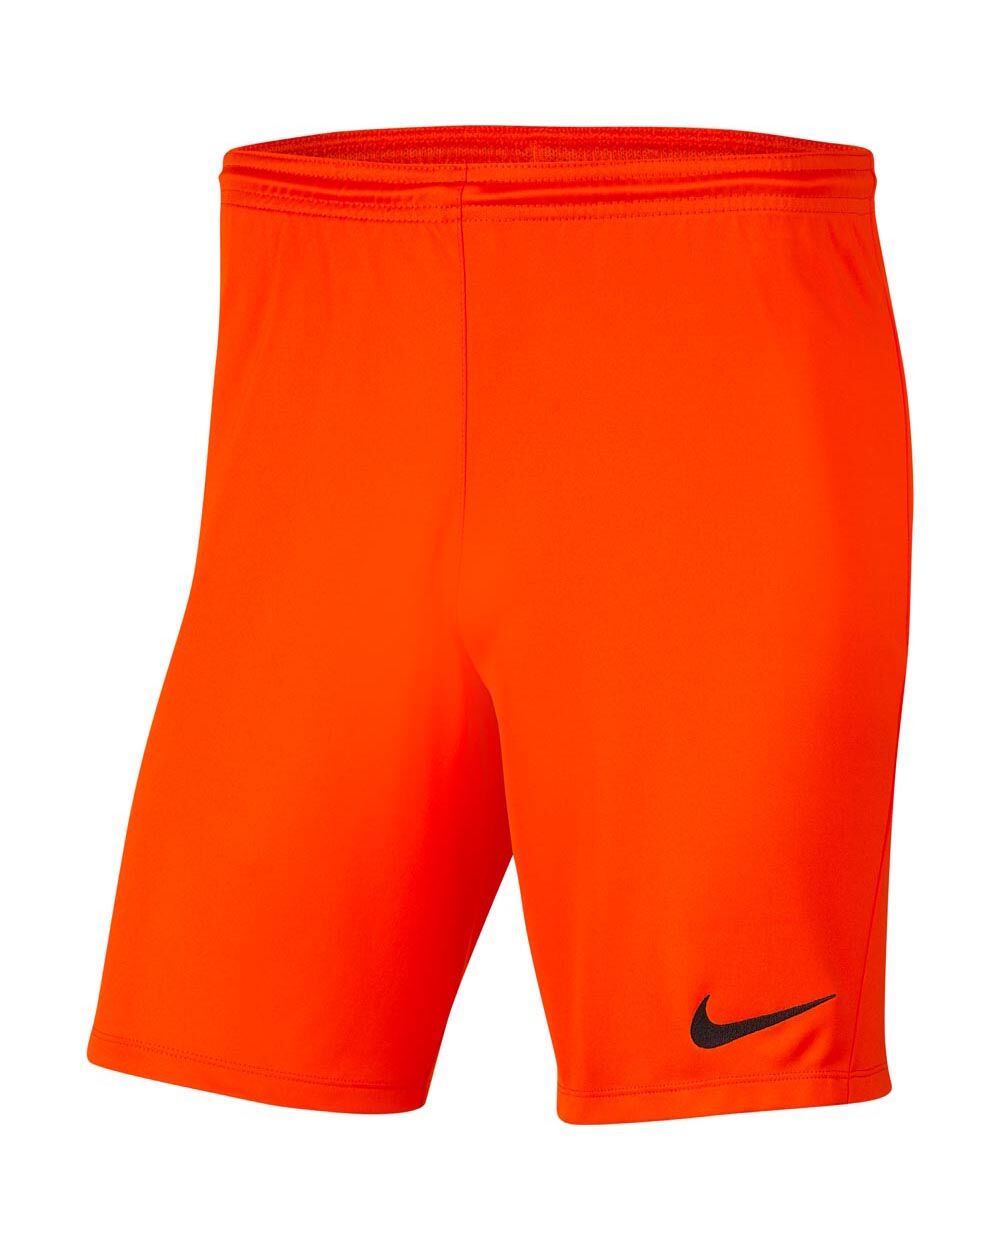 Nike Pantaloncini Park III Arancione Uomo BV6855-819 M